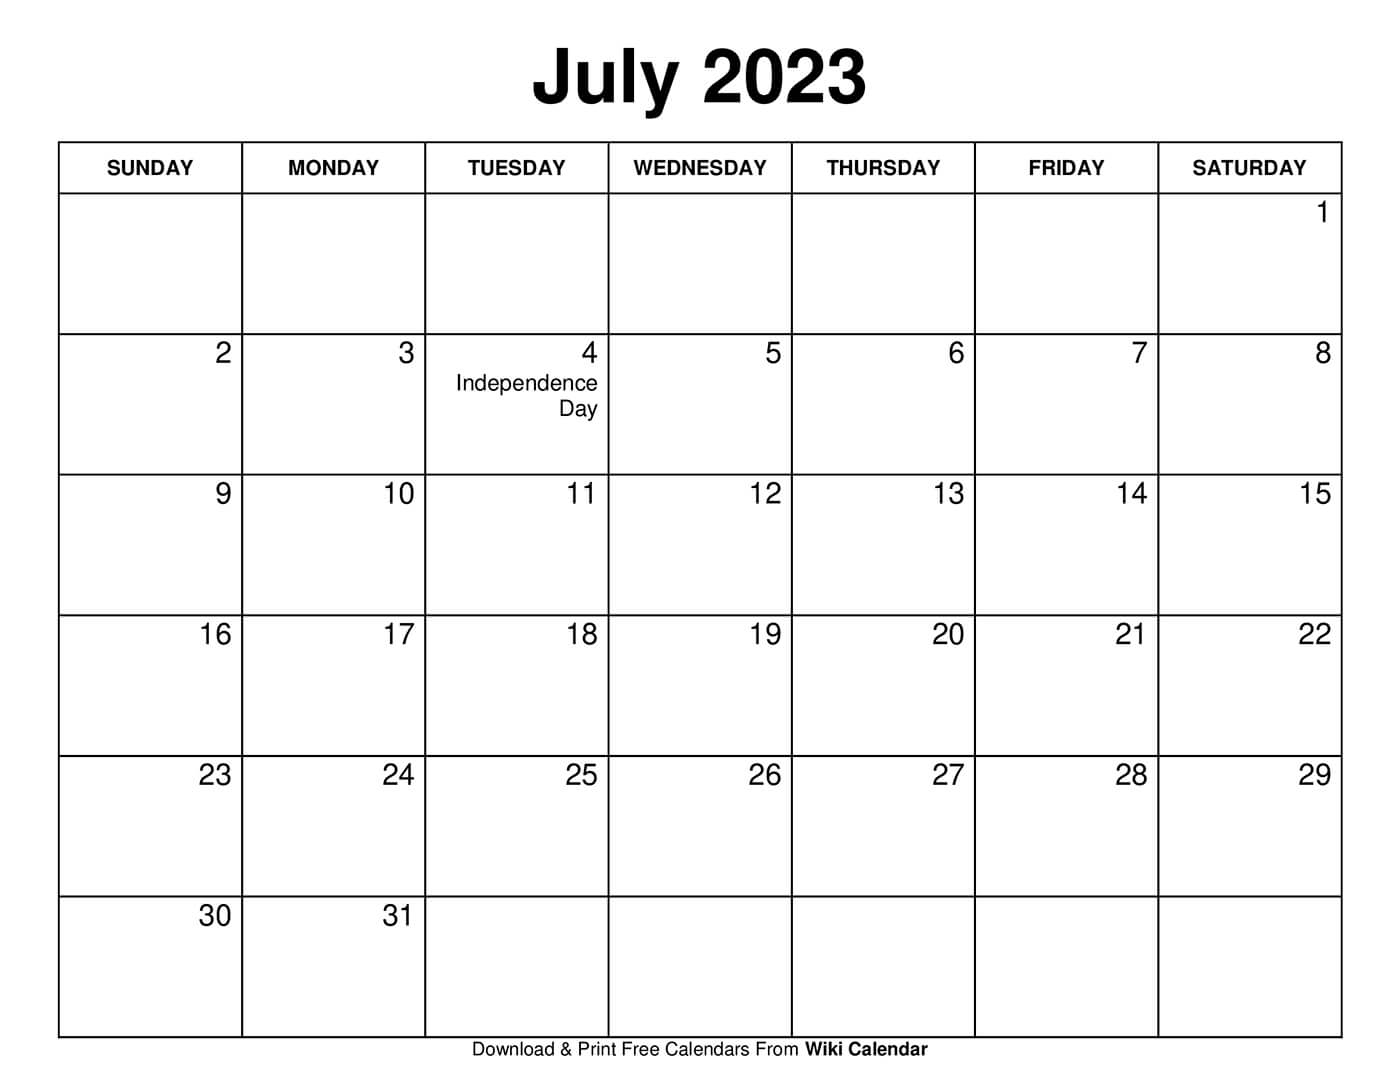 July 2023 Calendar Printable with Holidays